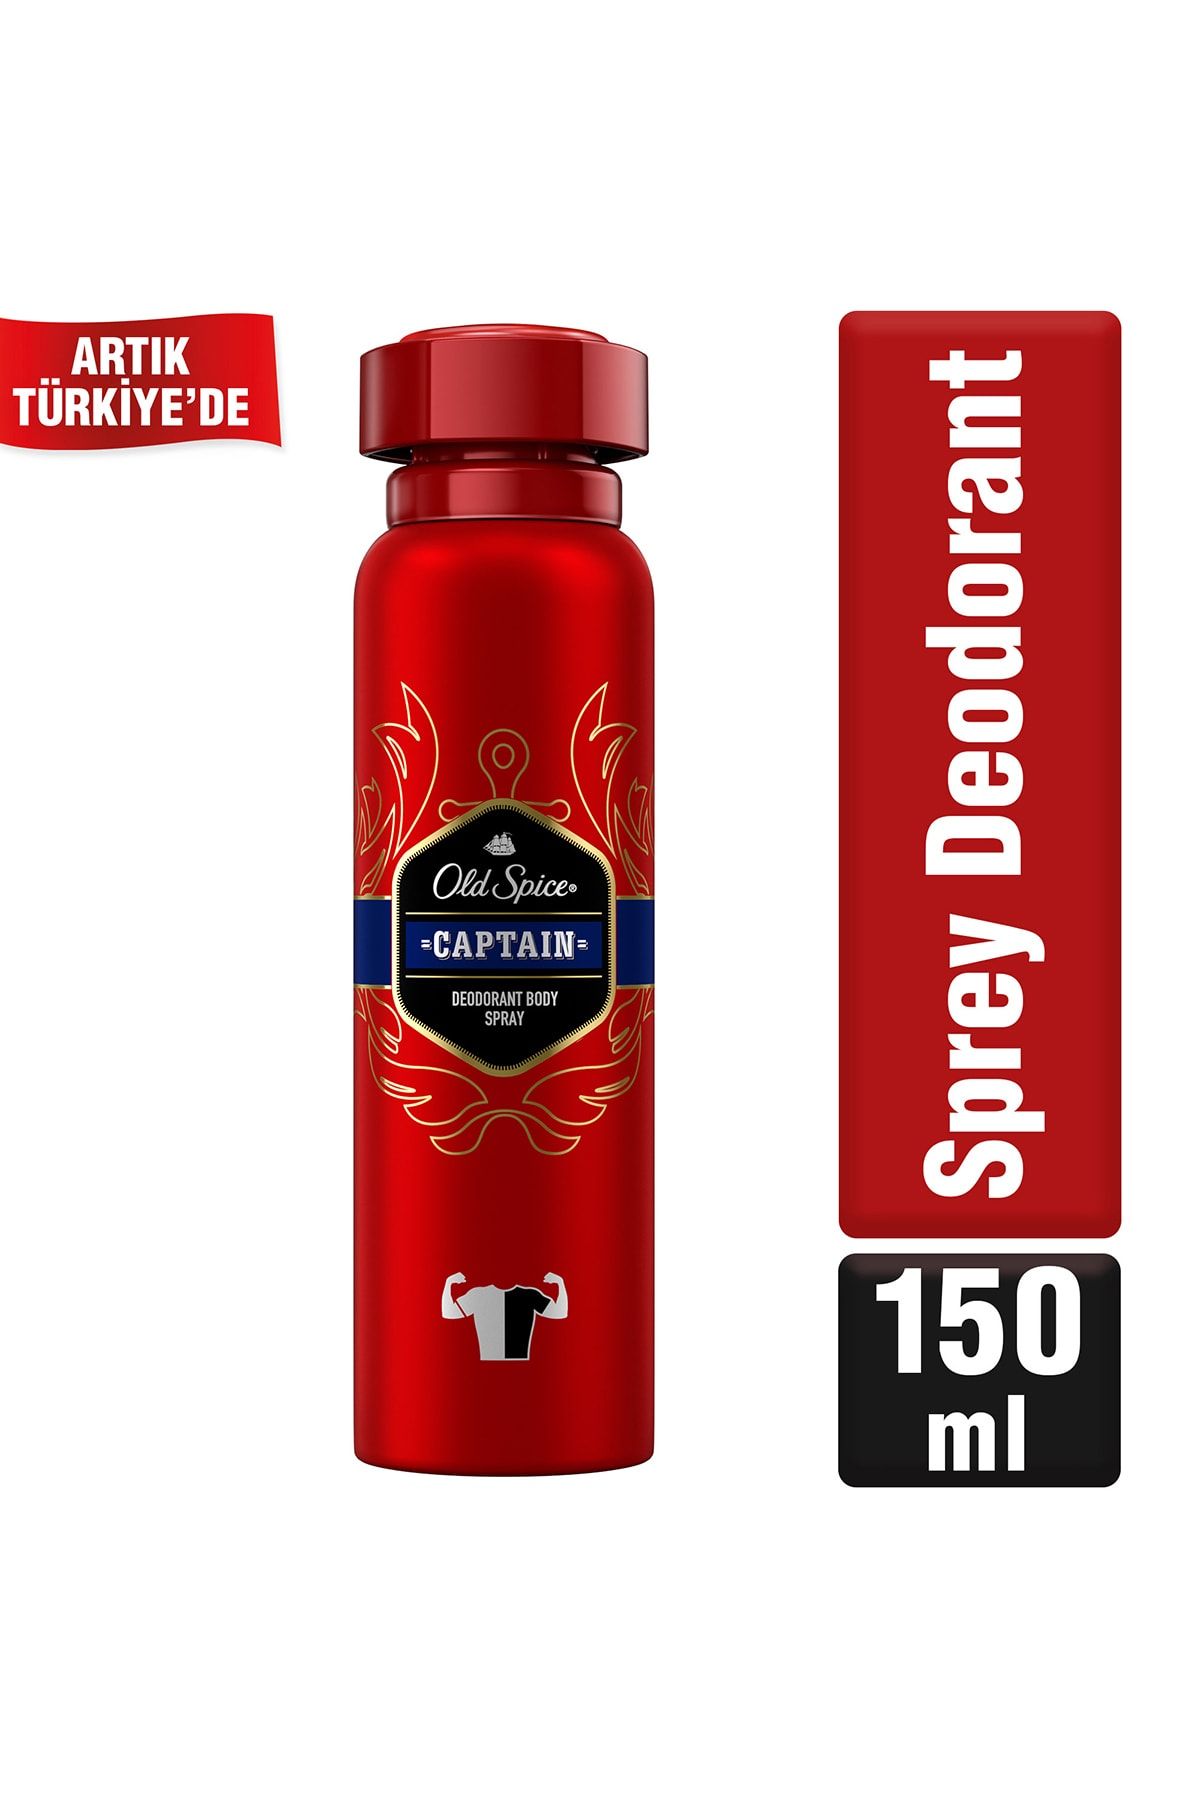 Old Spice Sprey Deodorant 150 ml Captain